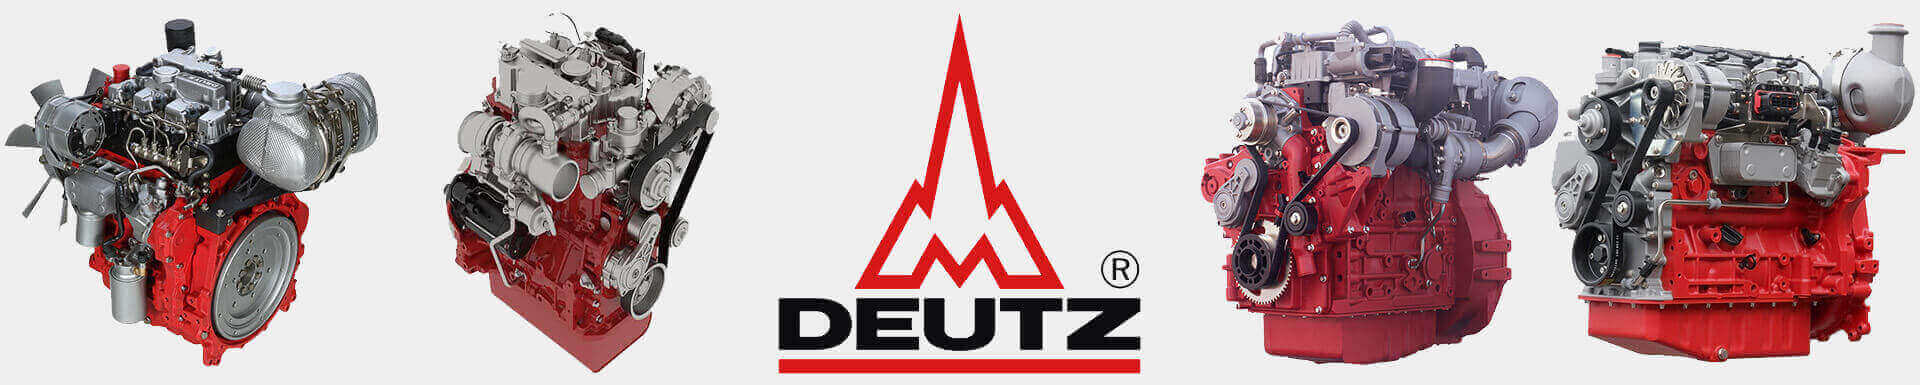 Deutz Engines